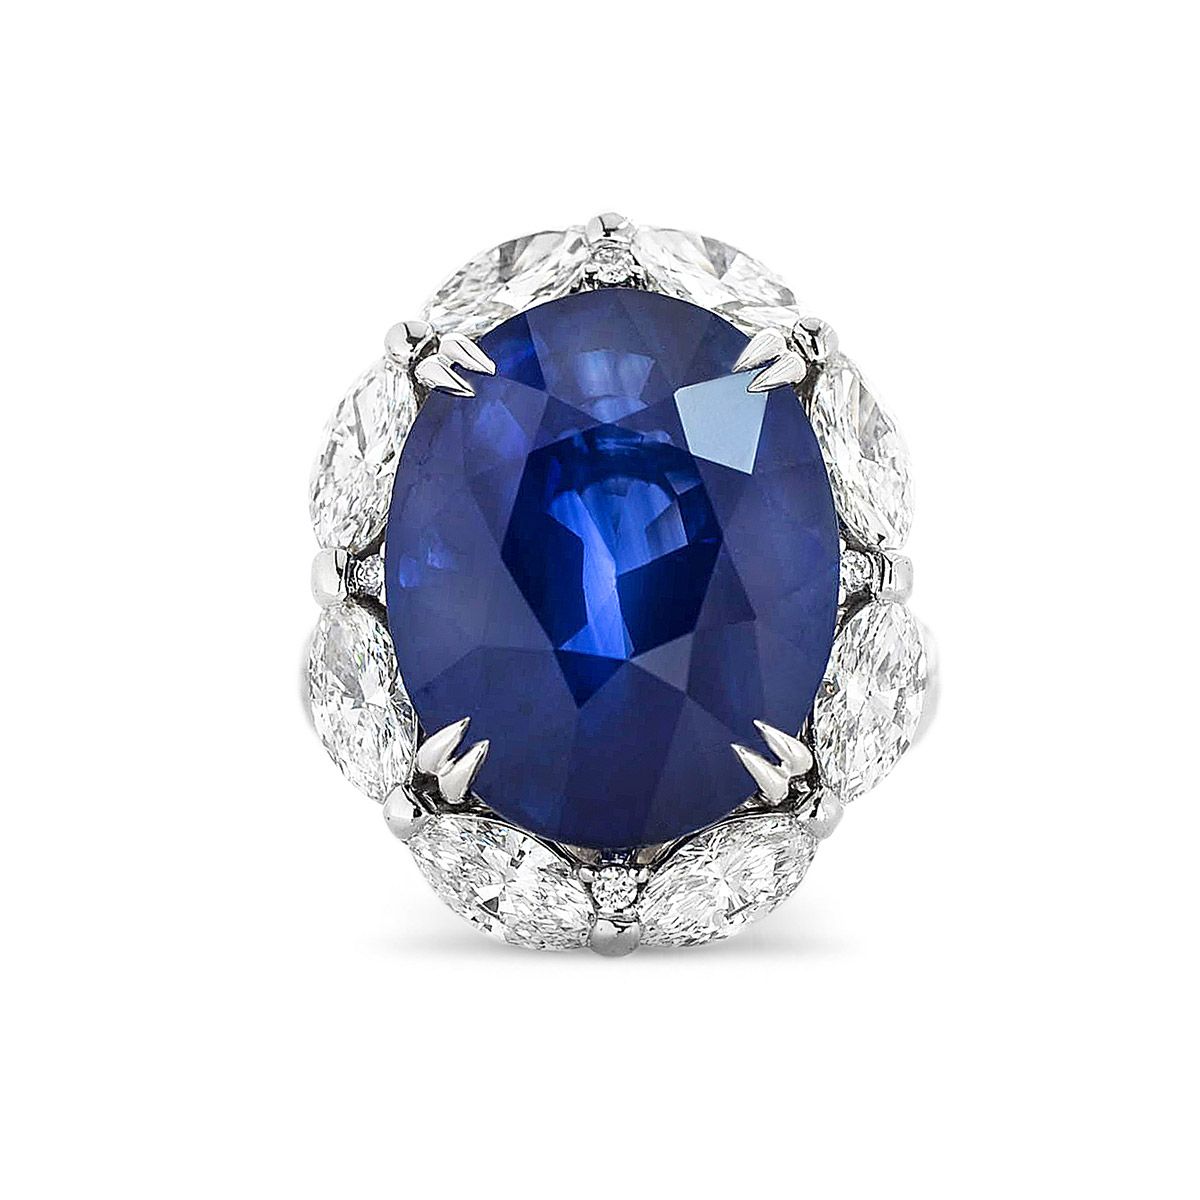 Natural Vivid Blue Sri-Lanka Sapphire Ring, 18.92 Ct. TW, GRS Certified, GRS2016-101924, Unheated